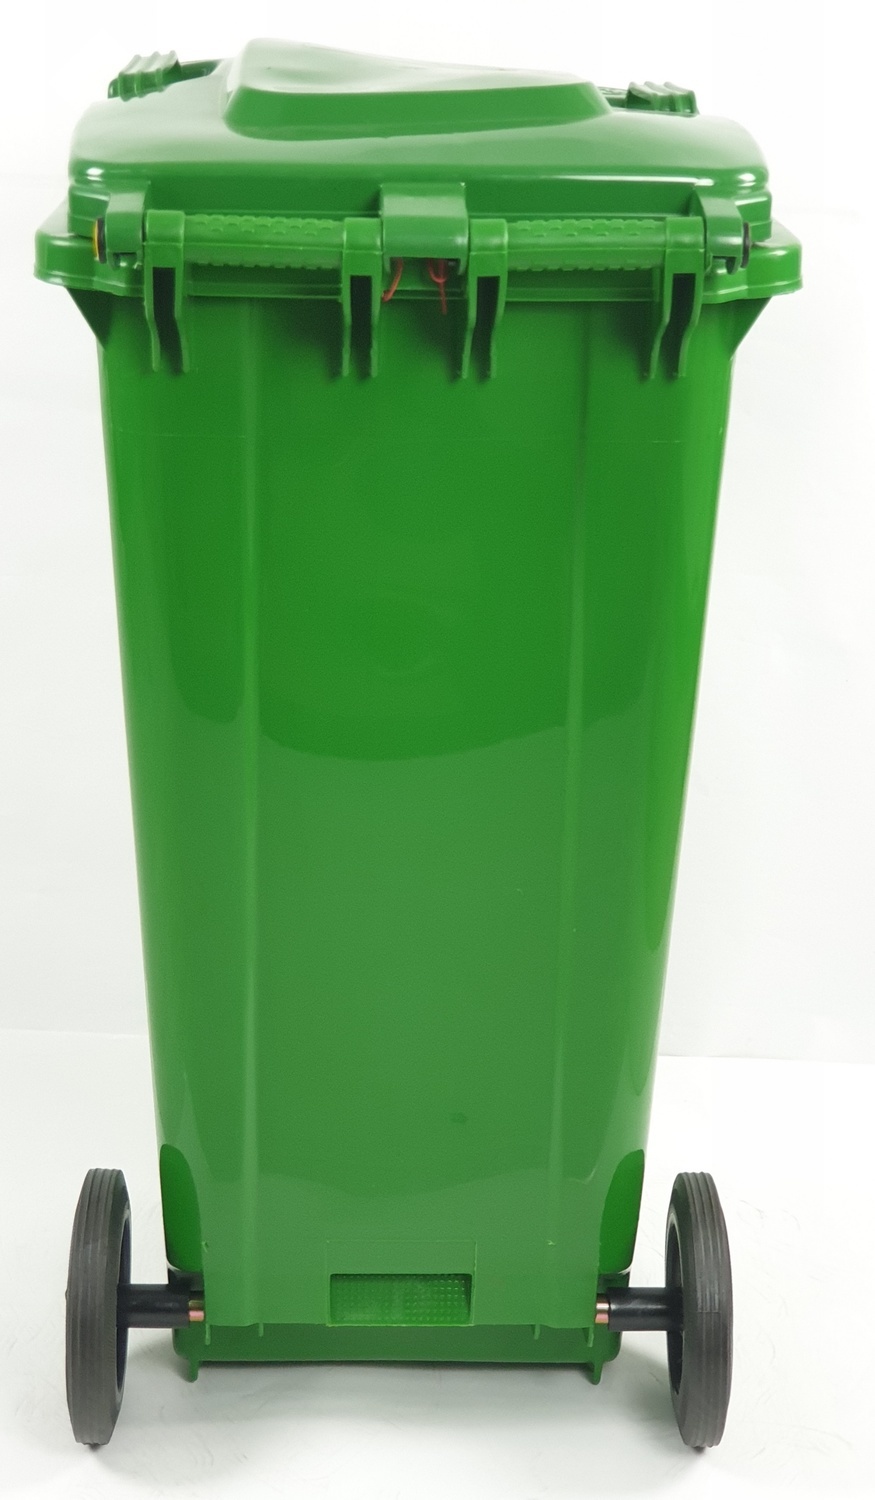 ICLEAN ถังขยะเทศบาลฝาเรียบทรงเหลี่ยม 120 ลิตร รุ่น XDL-120-14G สีเขียว (ขยะเปียก)